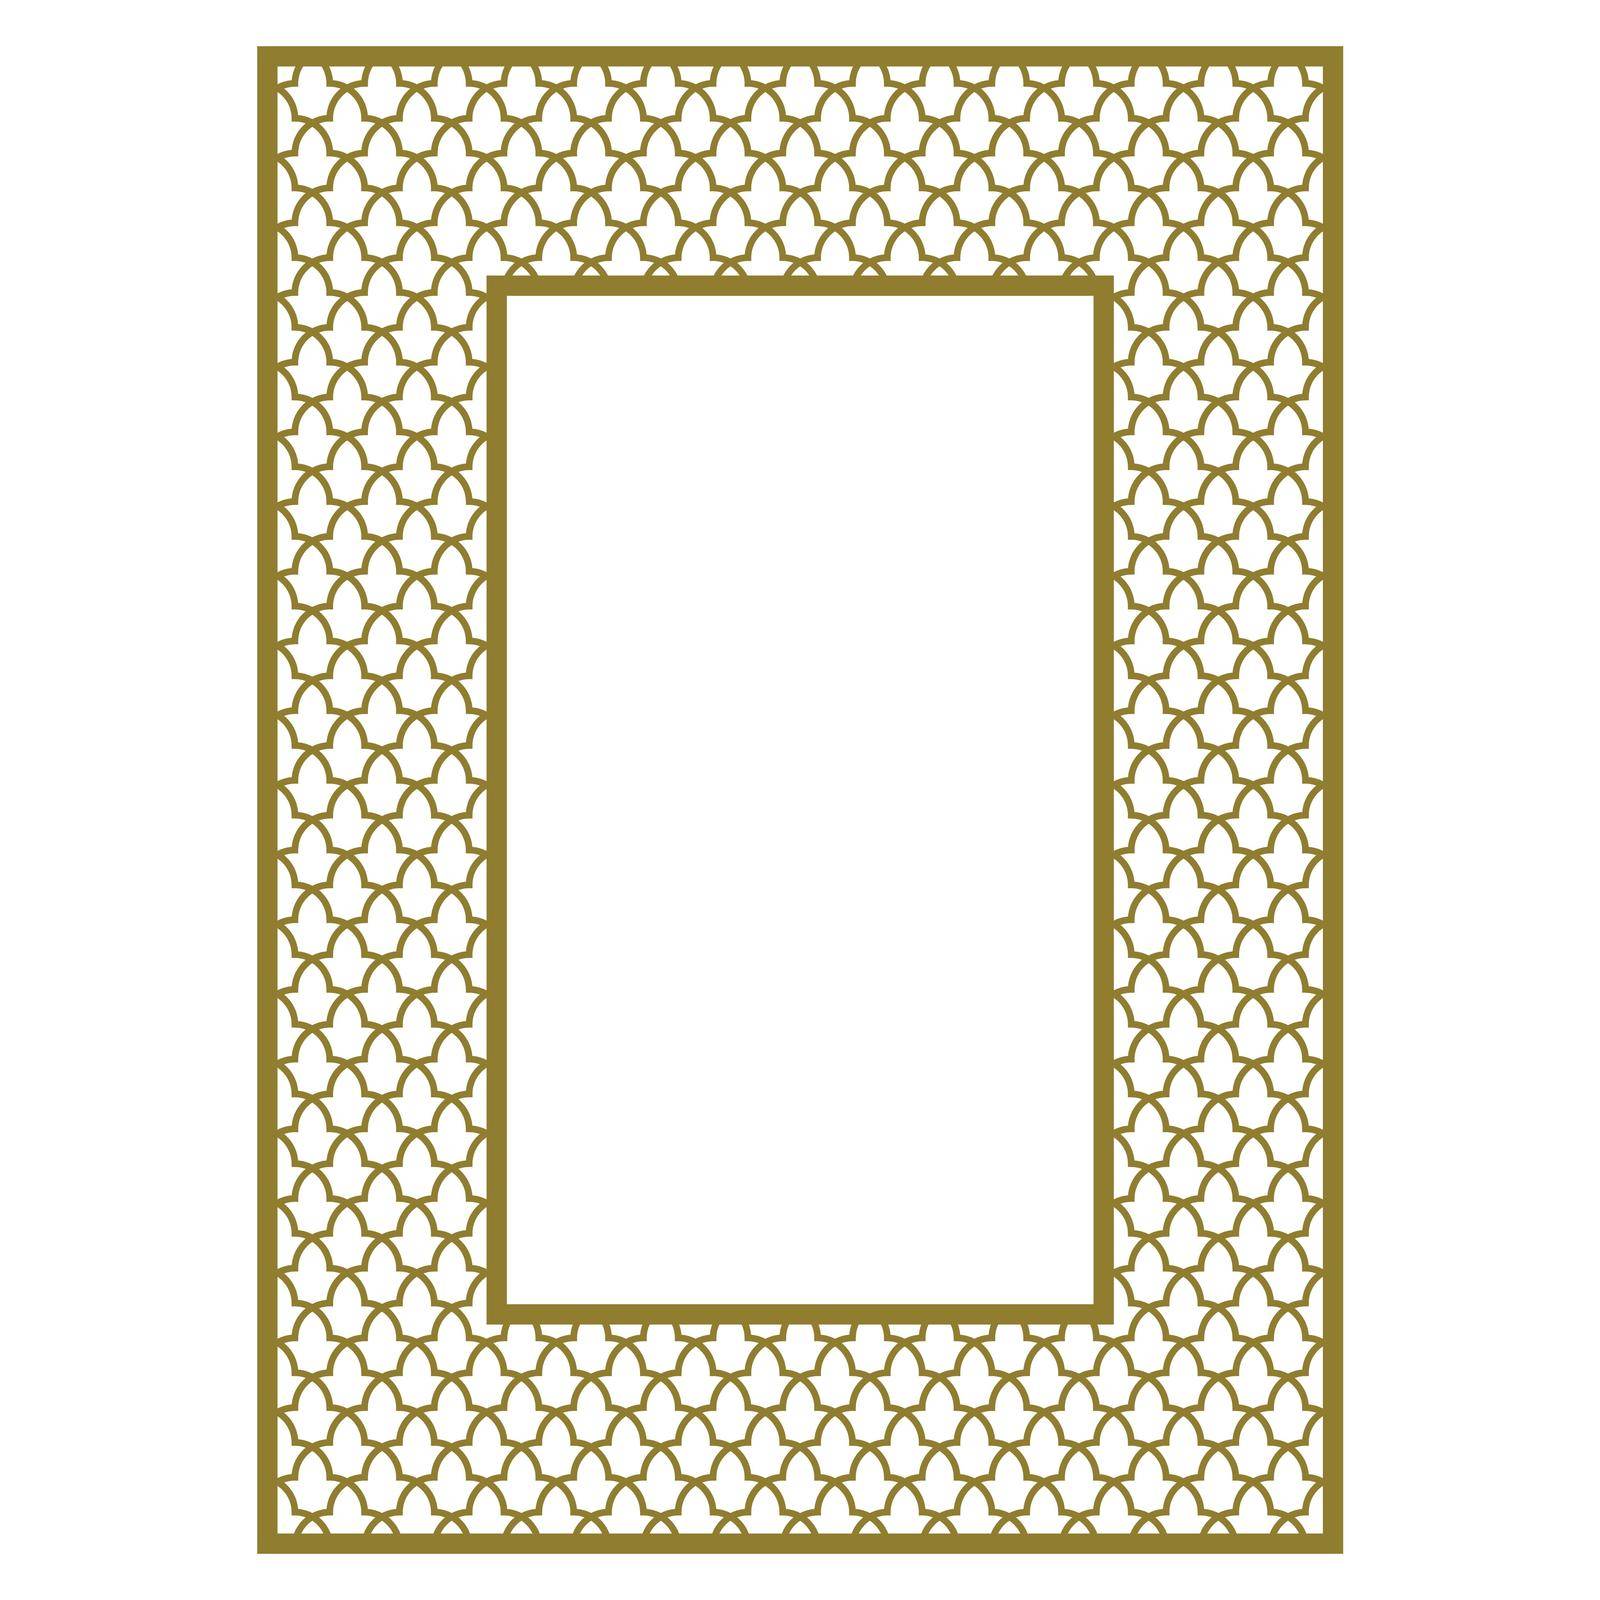 Decorative rectangular frame with an ornament